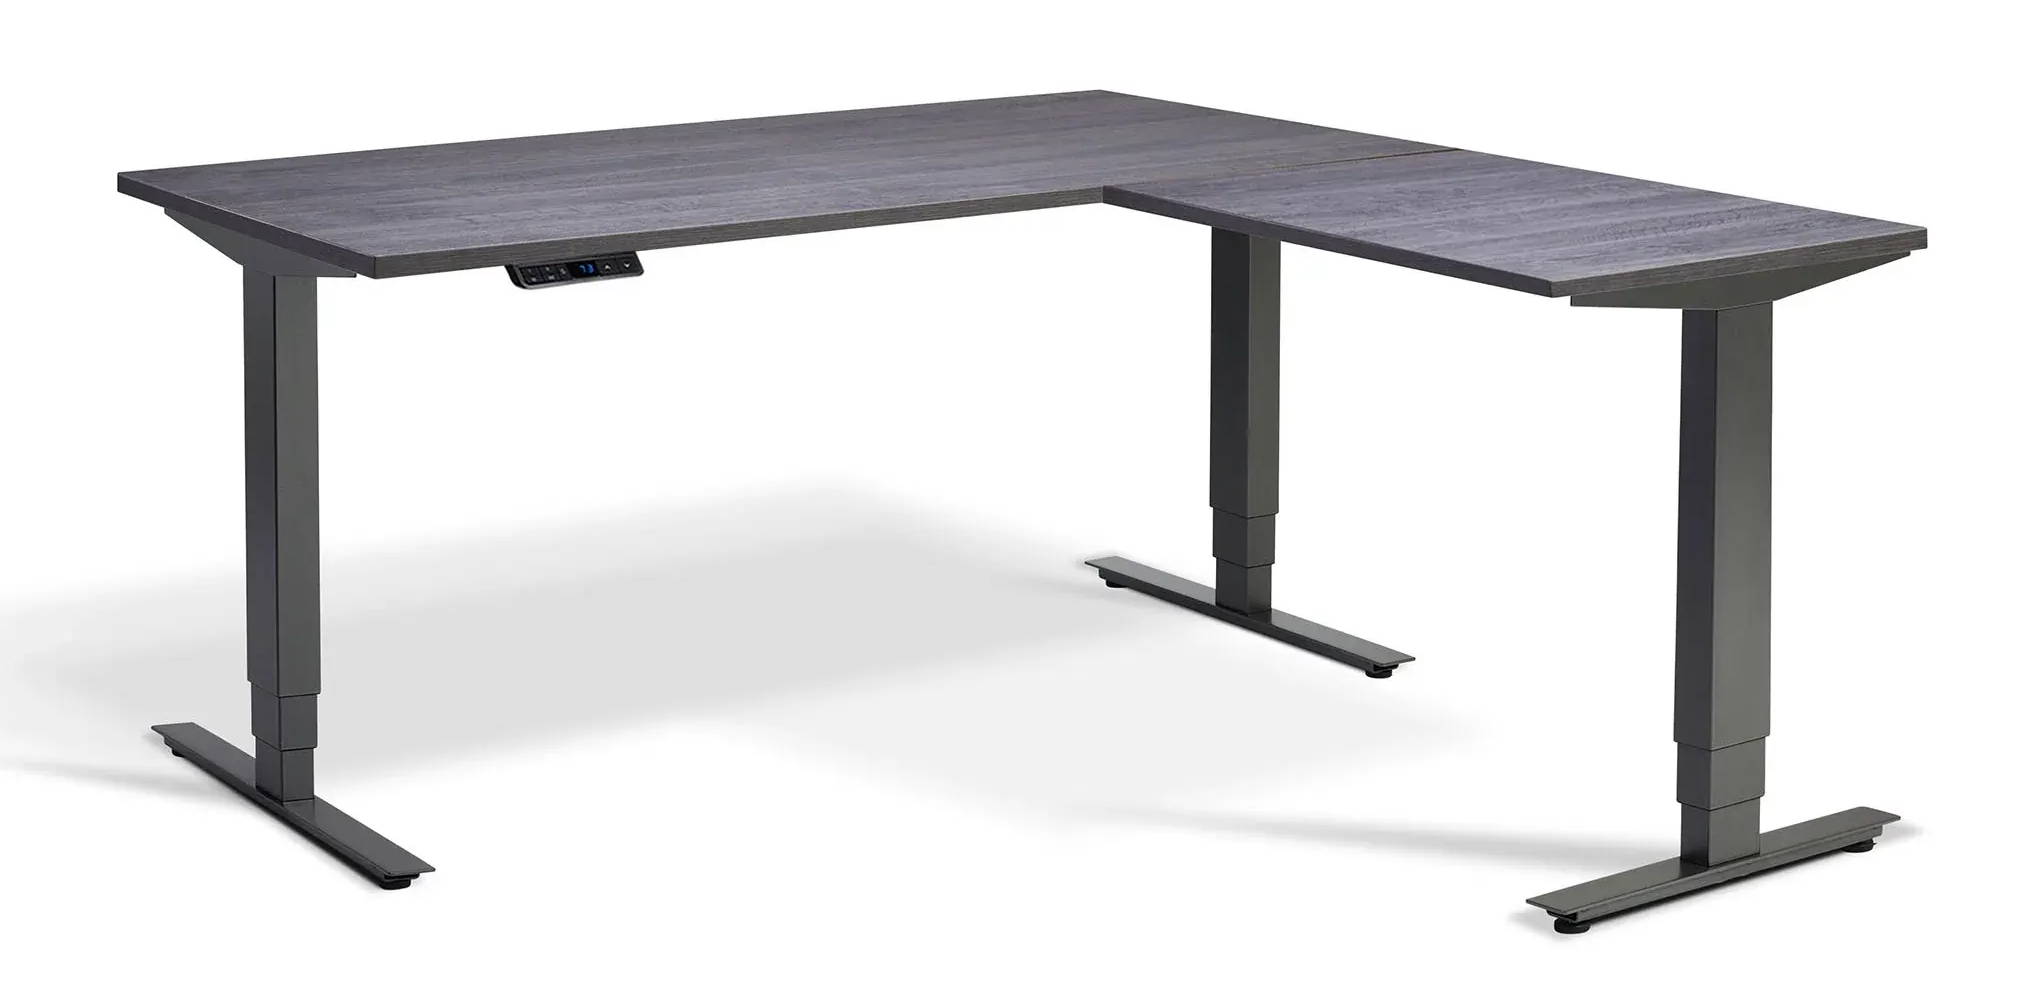 Atlas Standing Corner Desk - best standing desk for large spaces